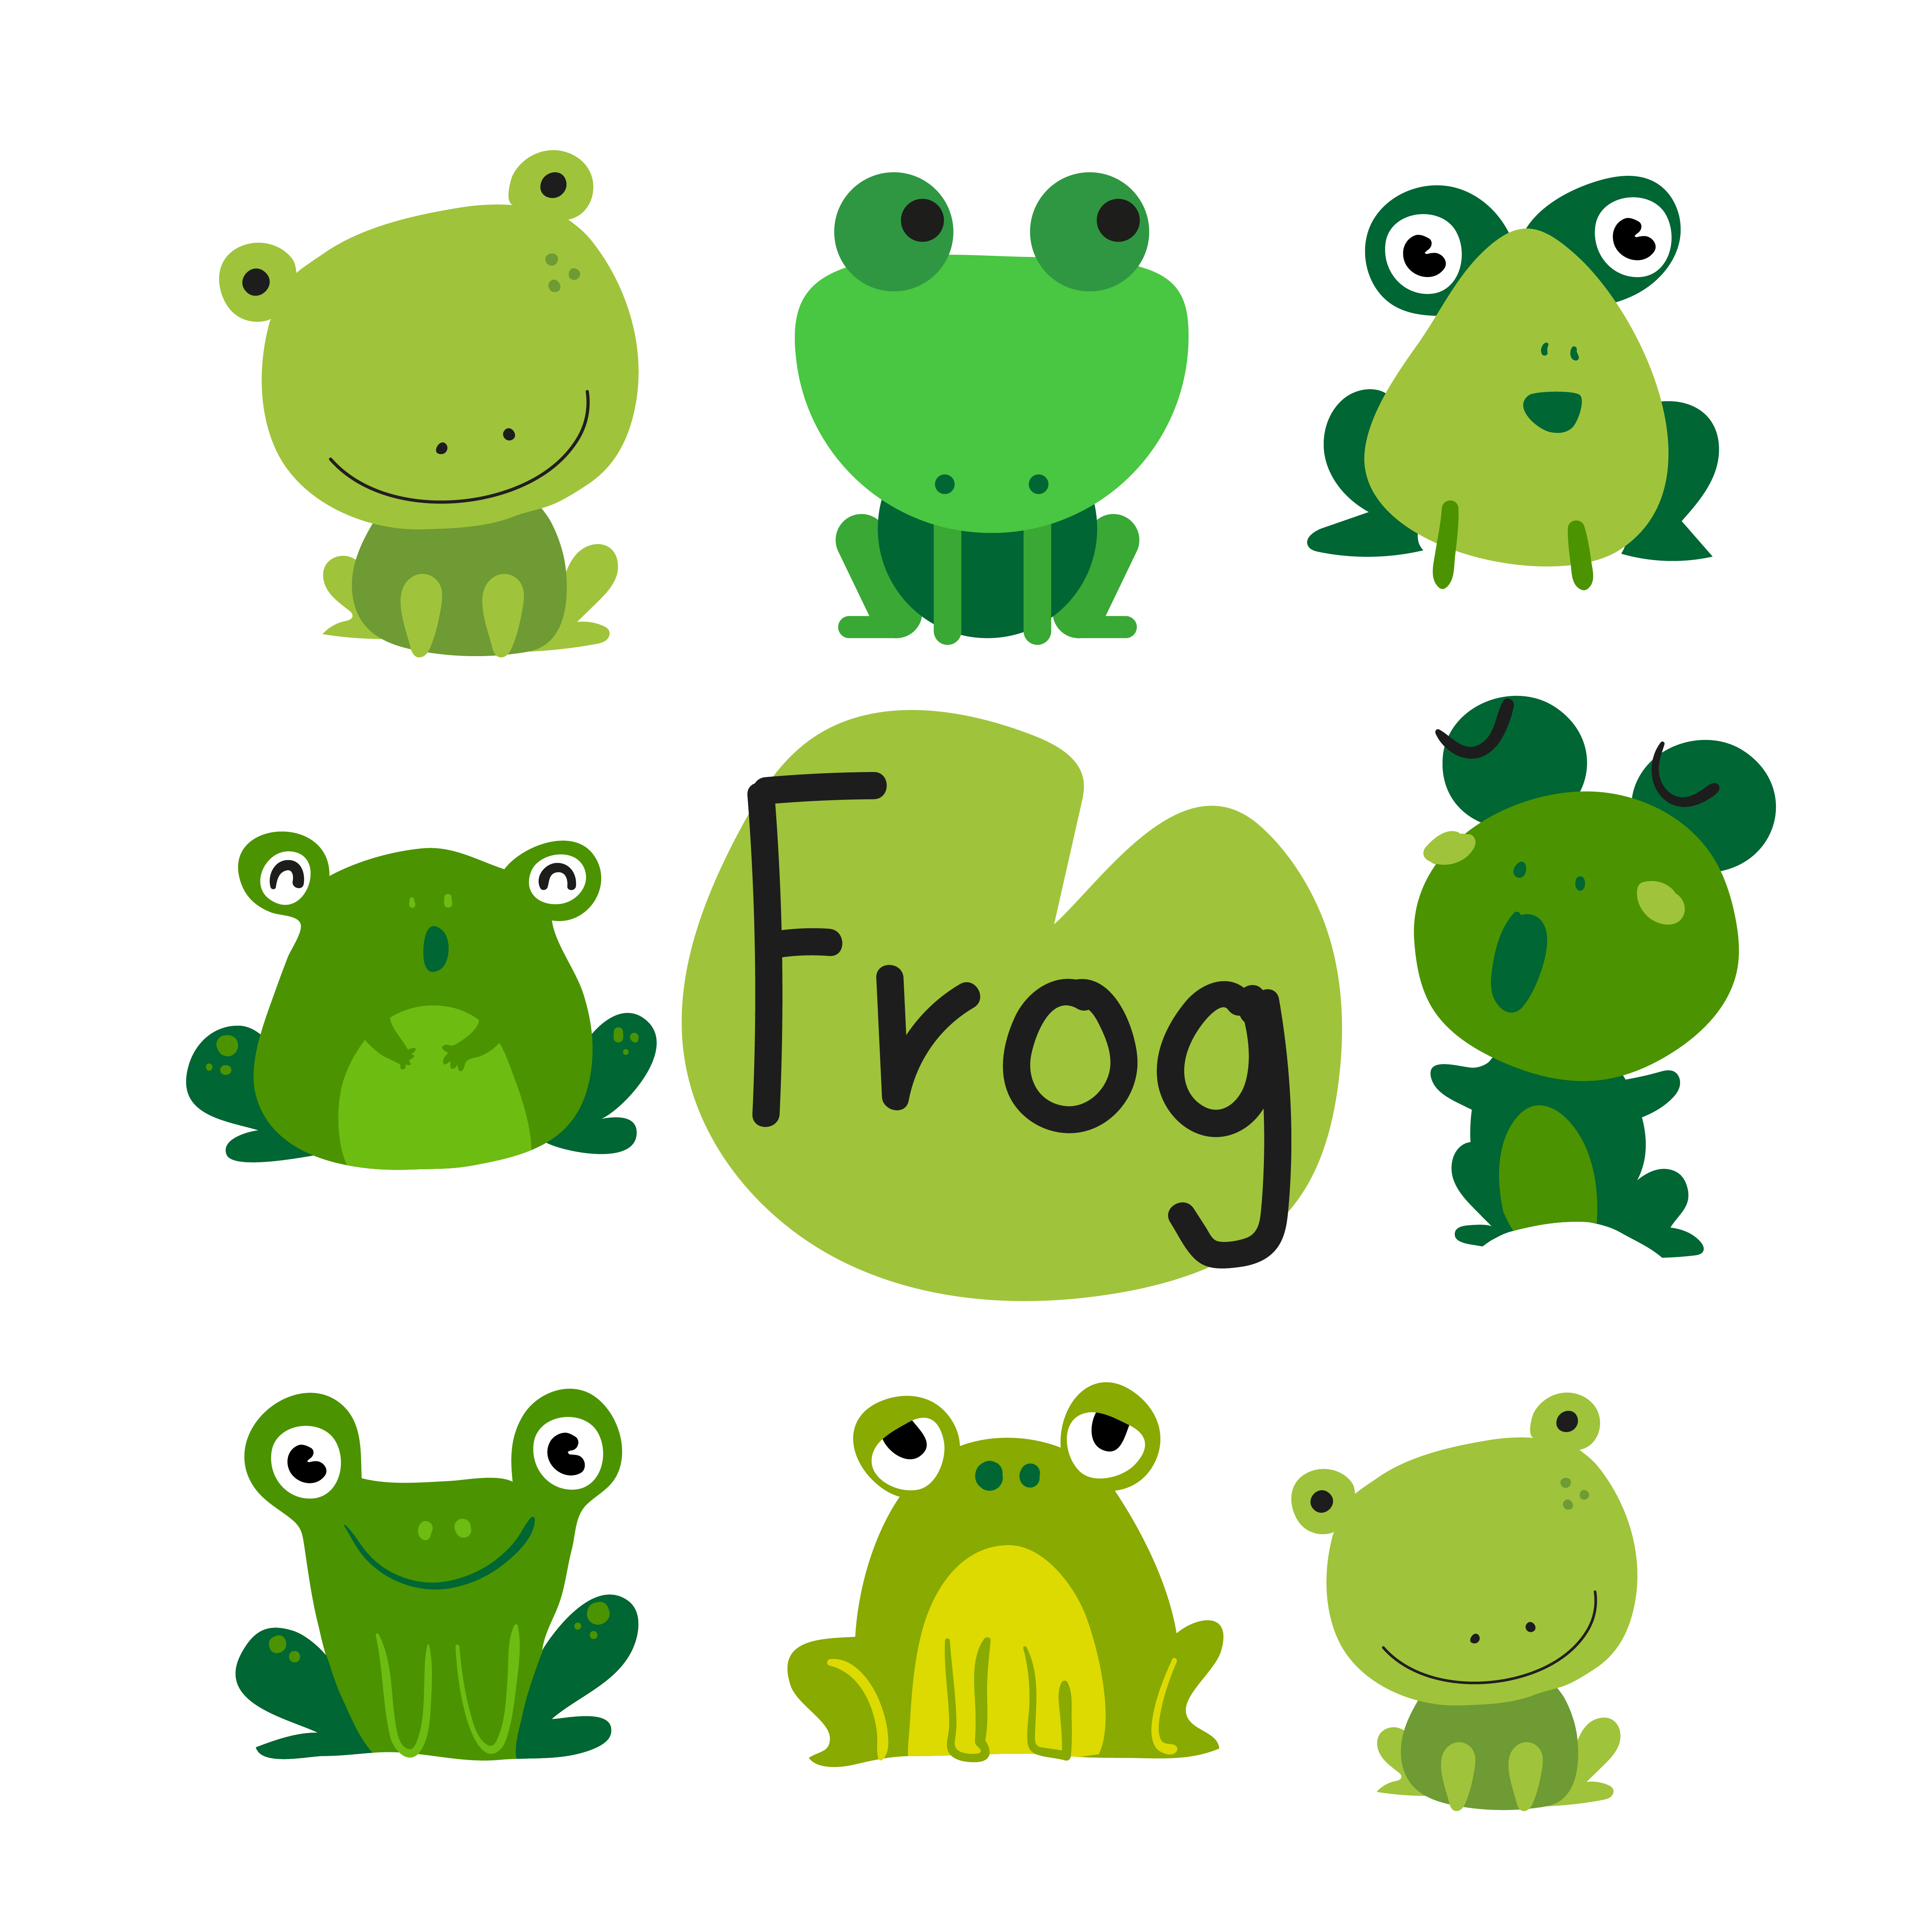 Download frogs vector collection design 476252 - Download Free Vectors, Clipart Graphics & Vector Art